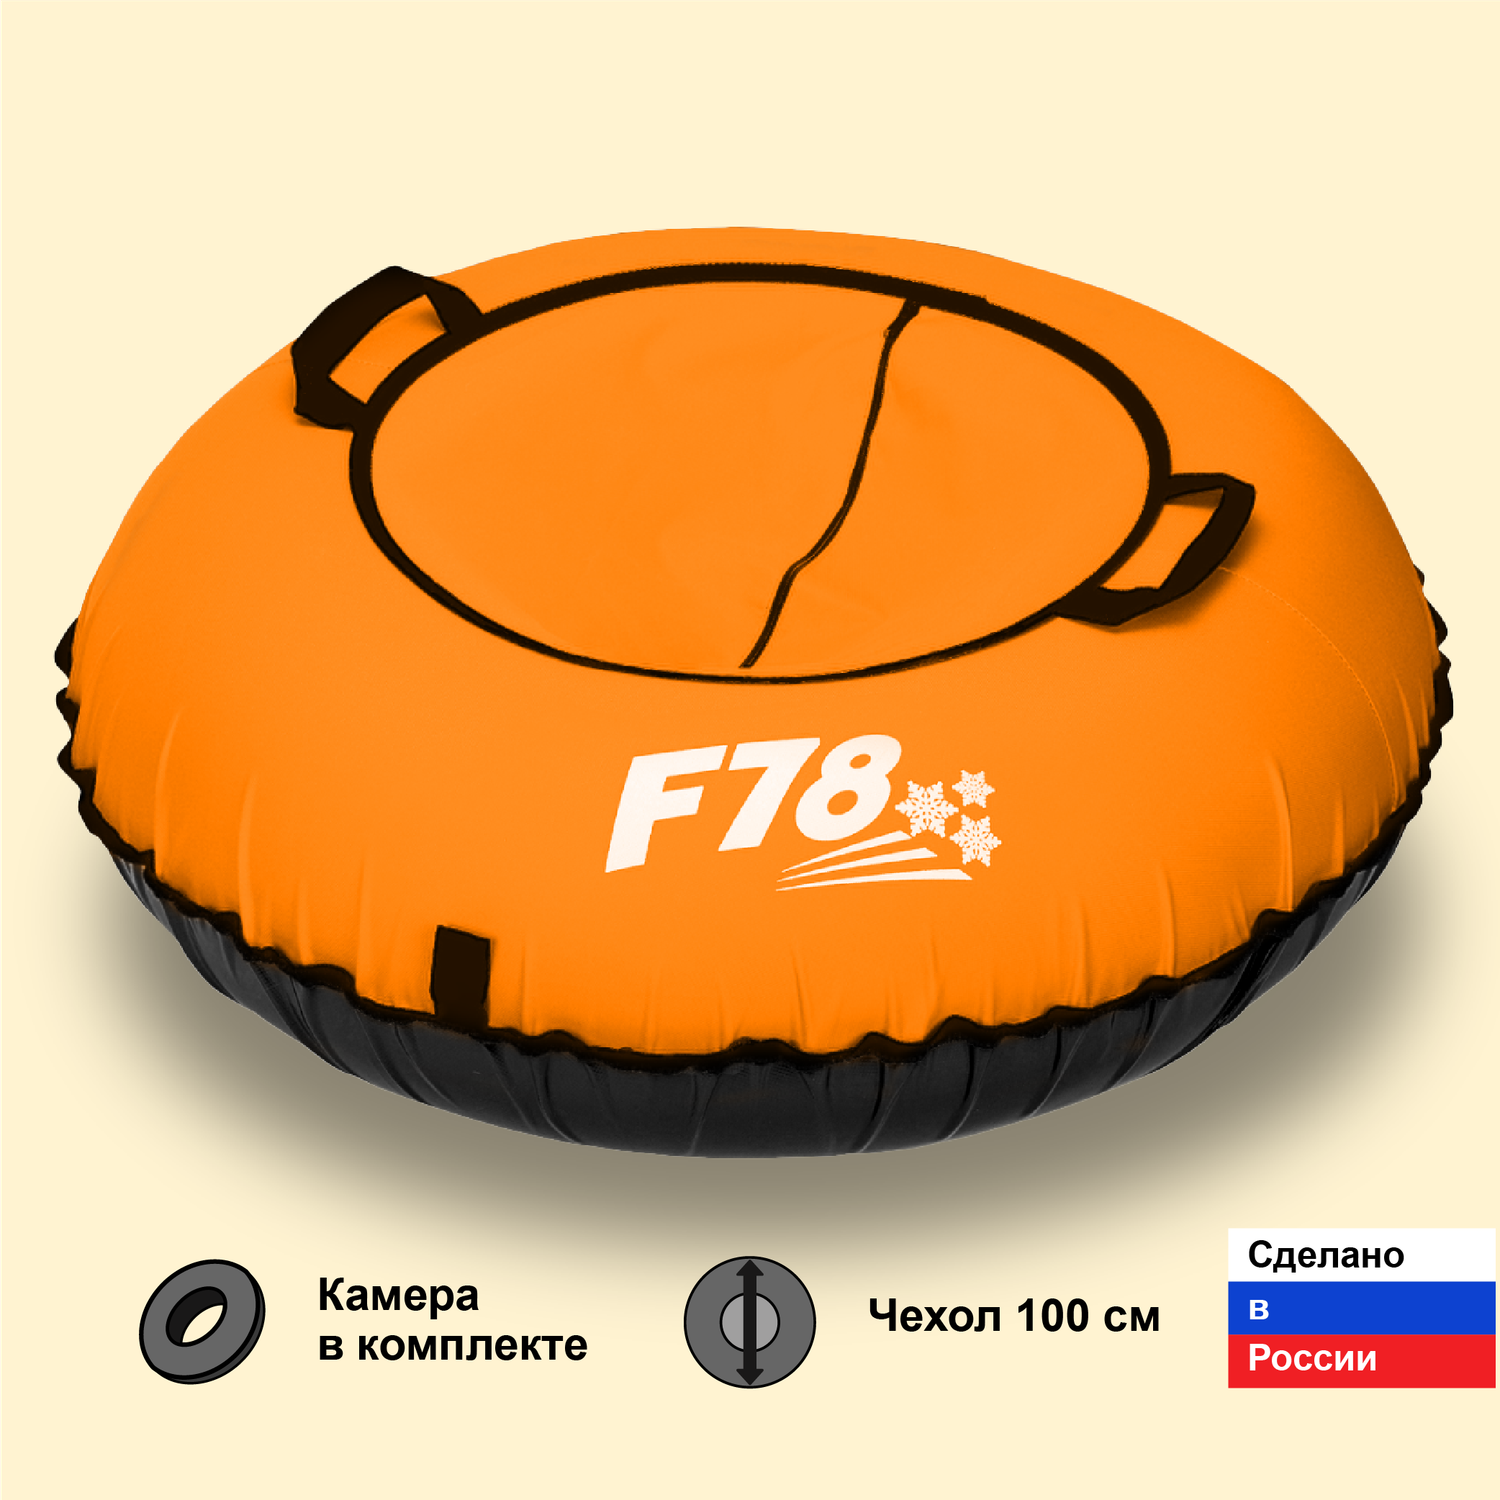 Тюбинг ватрушка F78 Оксфорд 100 см Оранжевый - фото 1